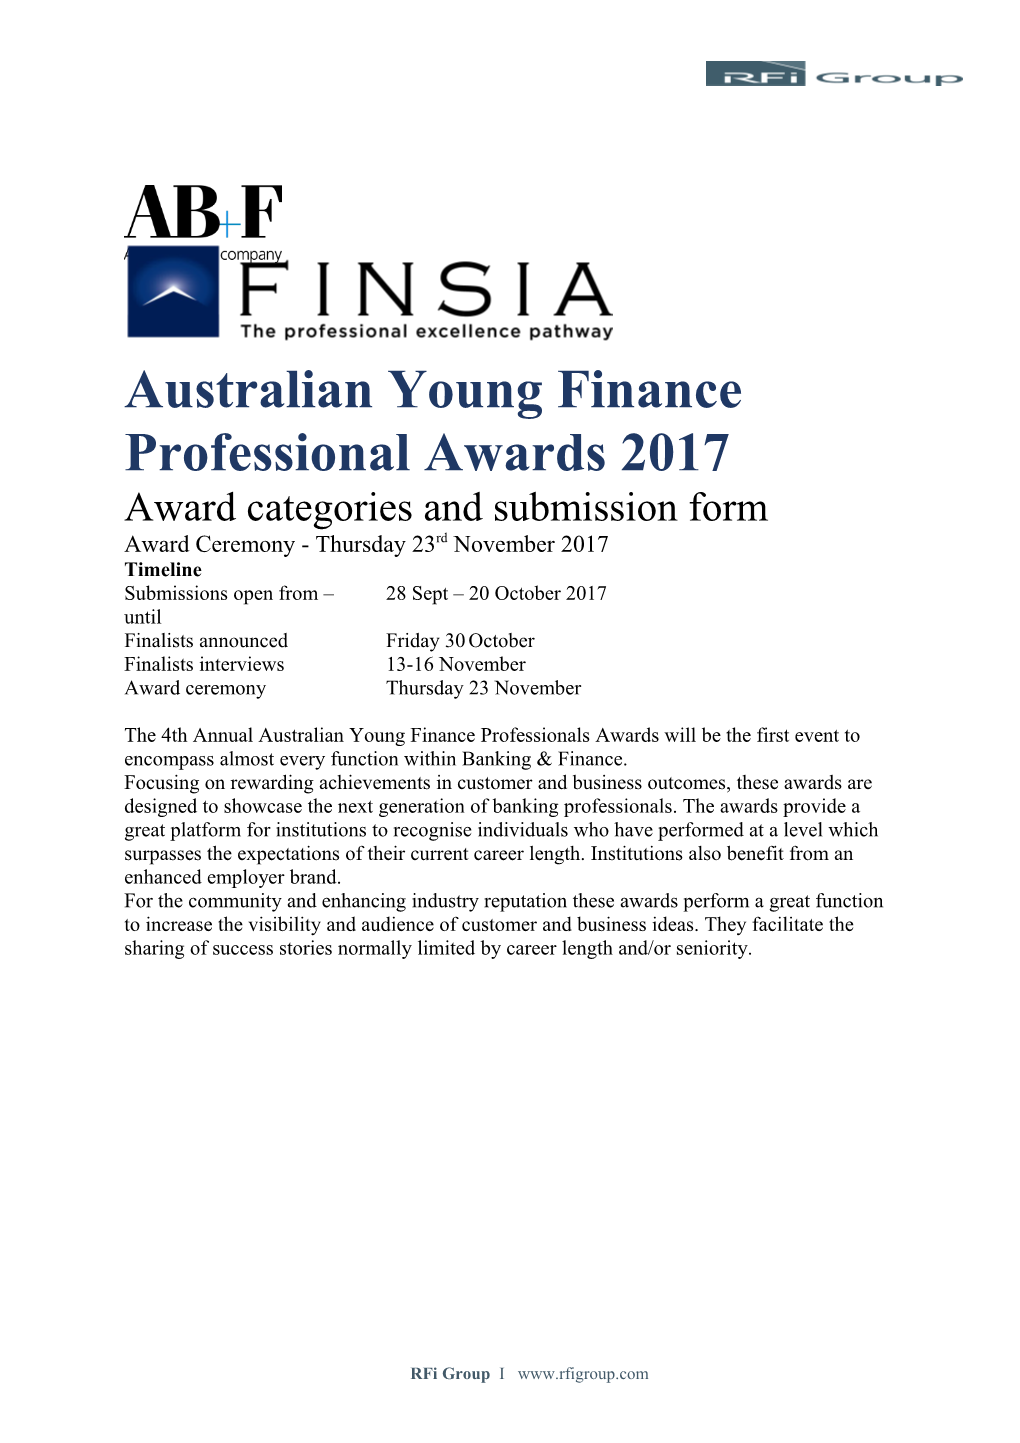 Australian Young Finance Professional Awards 2017